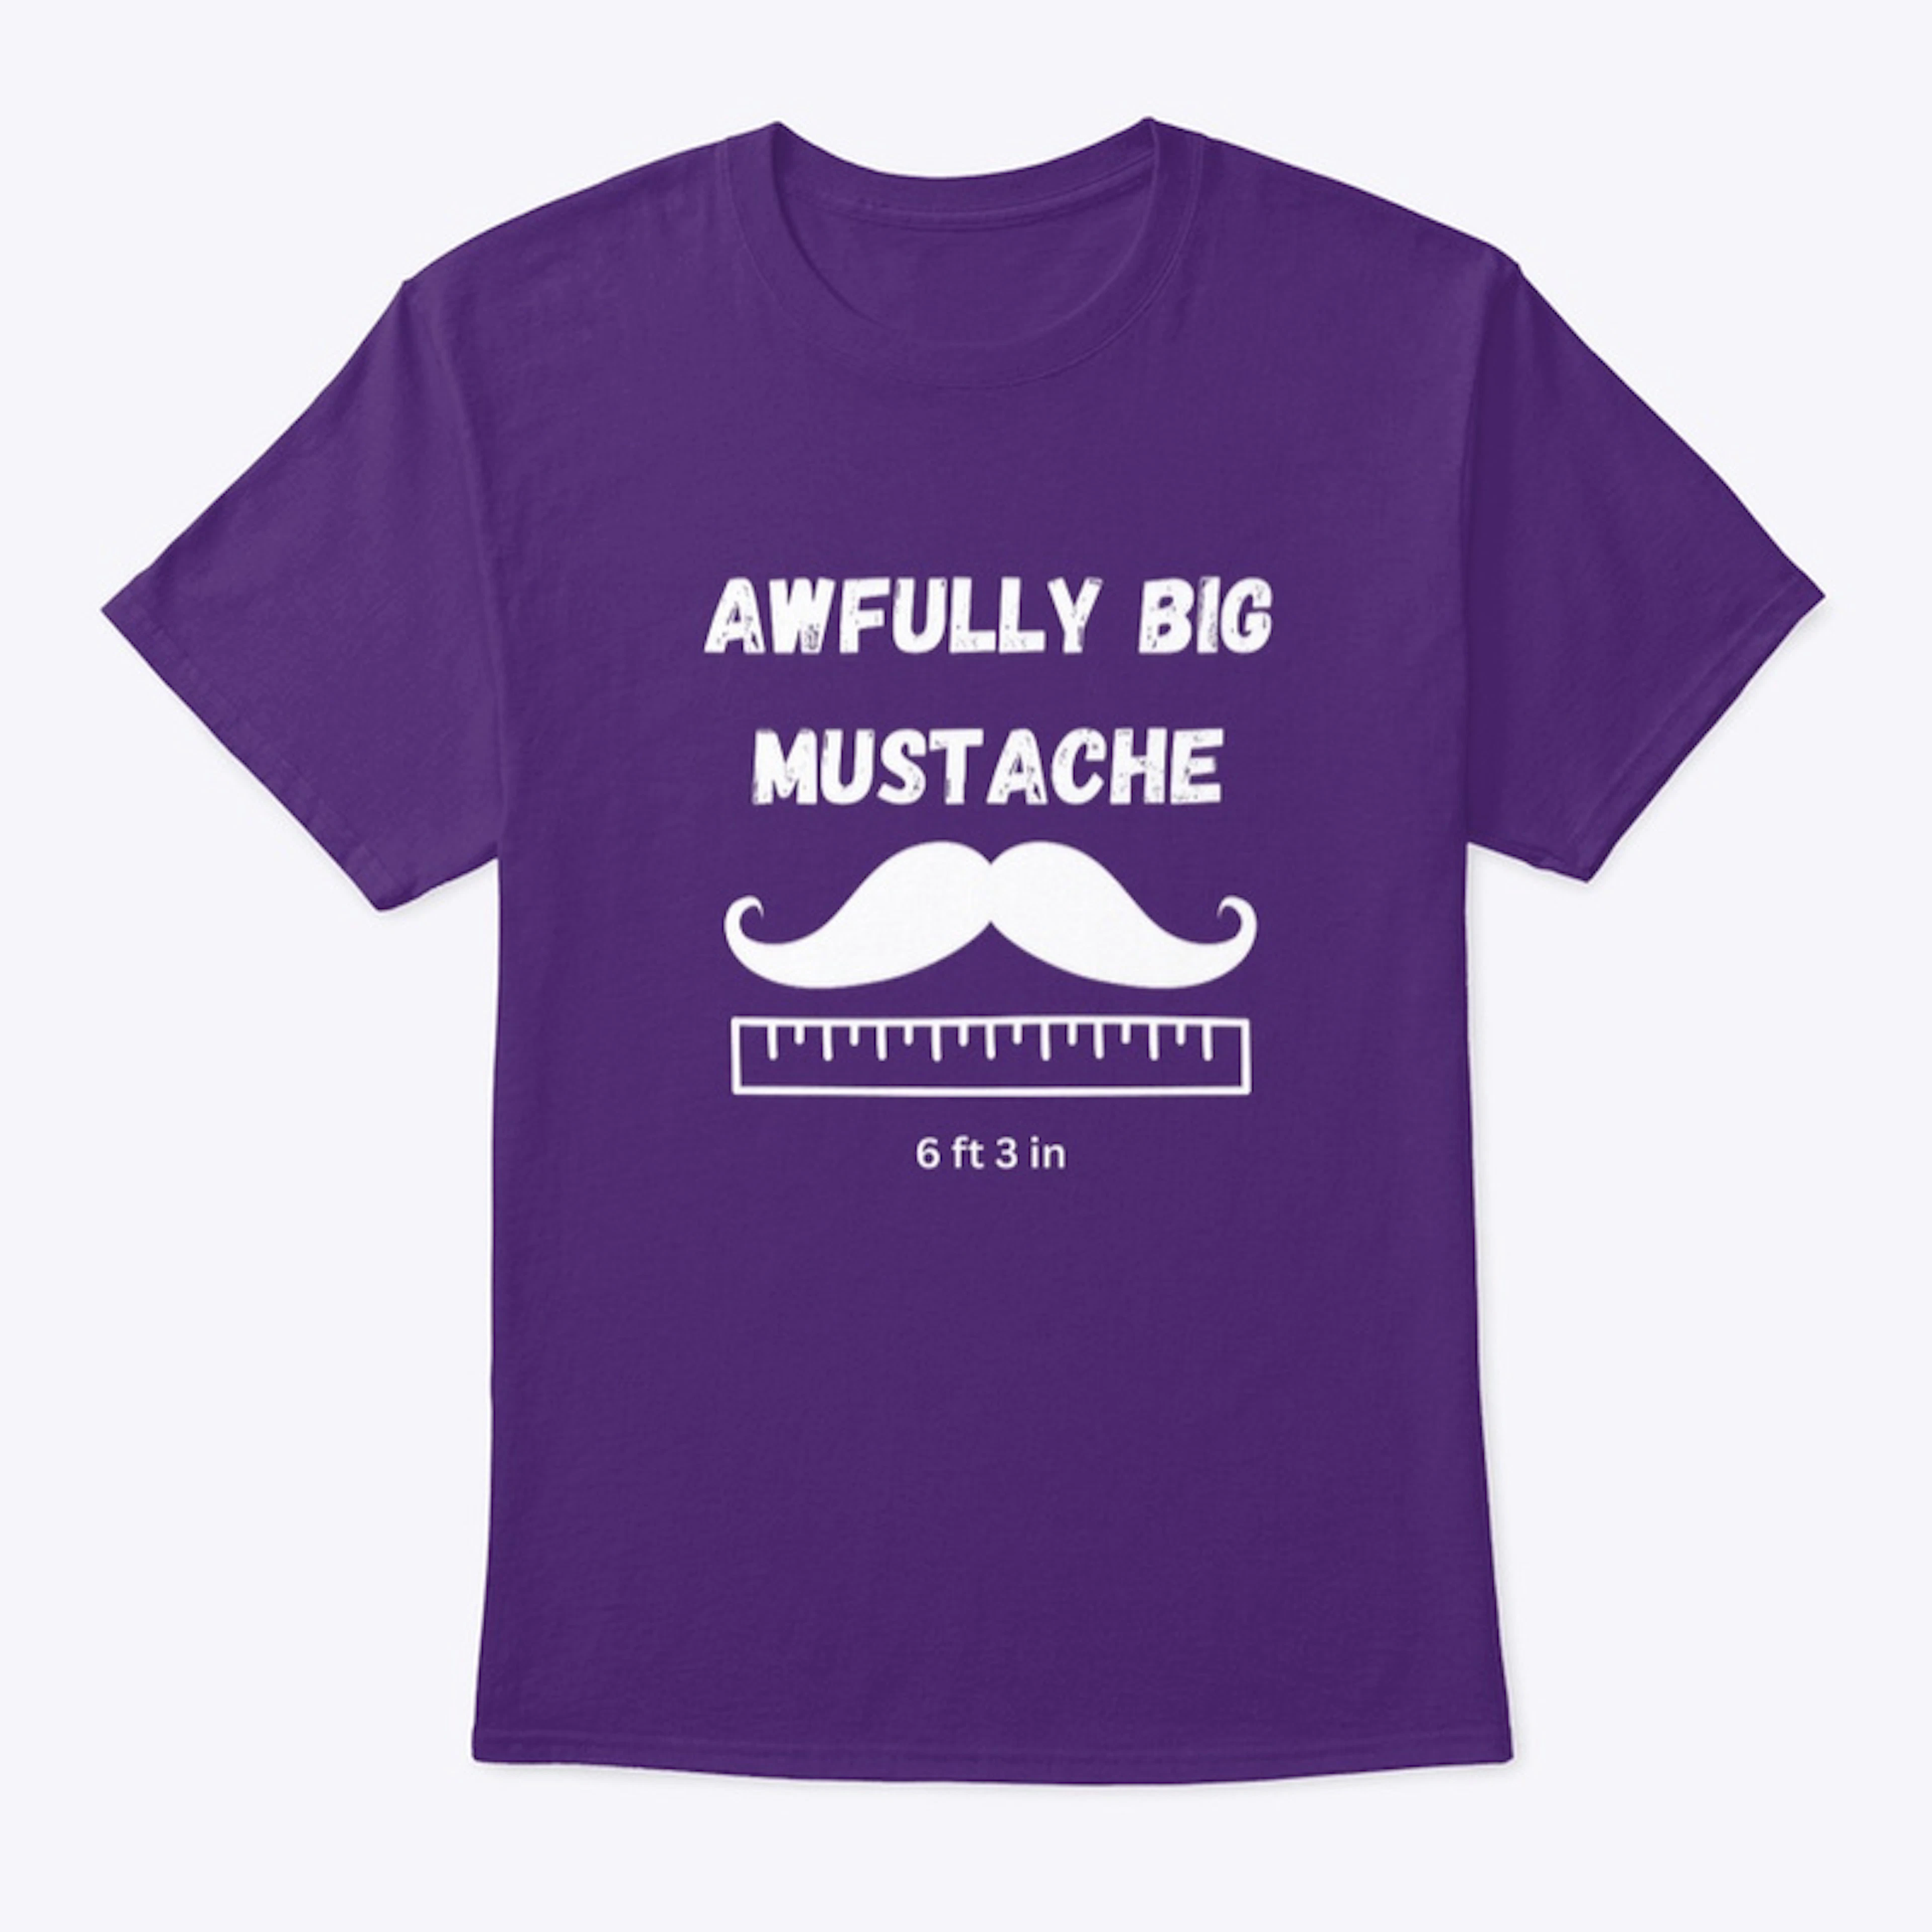 Awfully big mustache 2